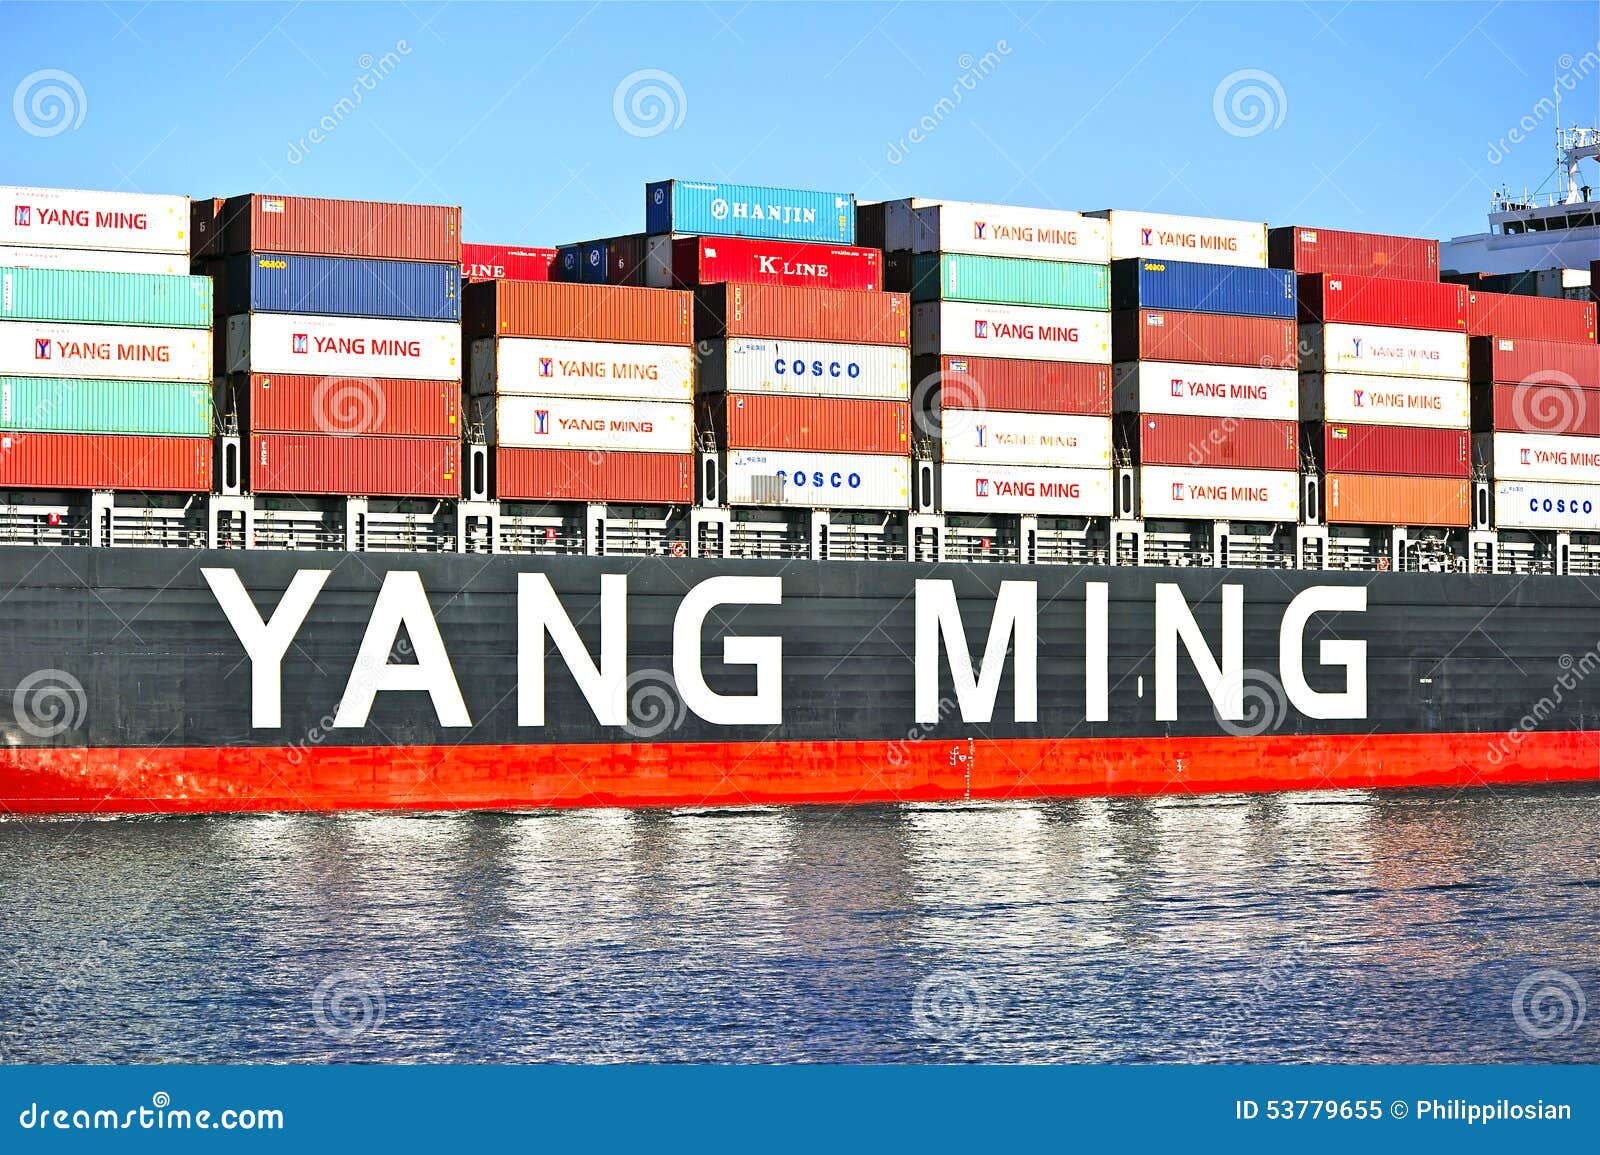 Yang Ming Marine Transport Vessel Editorial Image - Image of